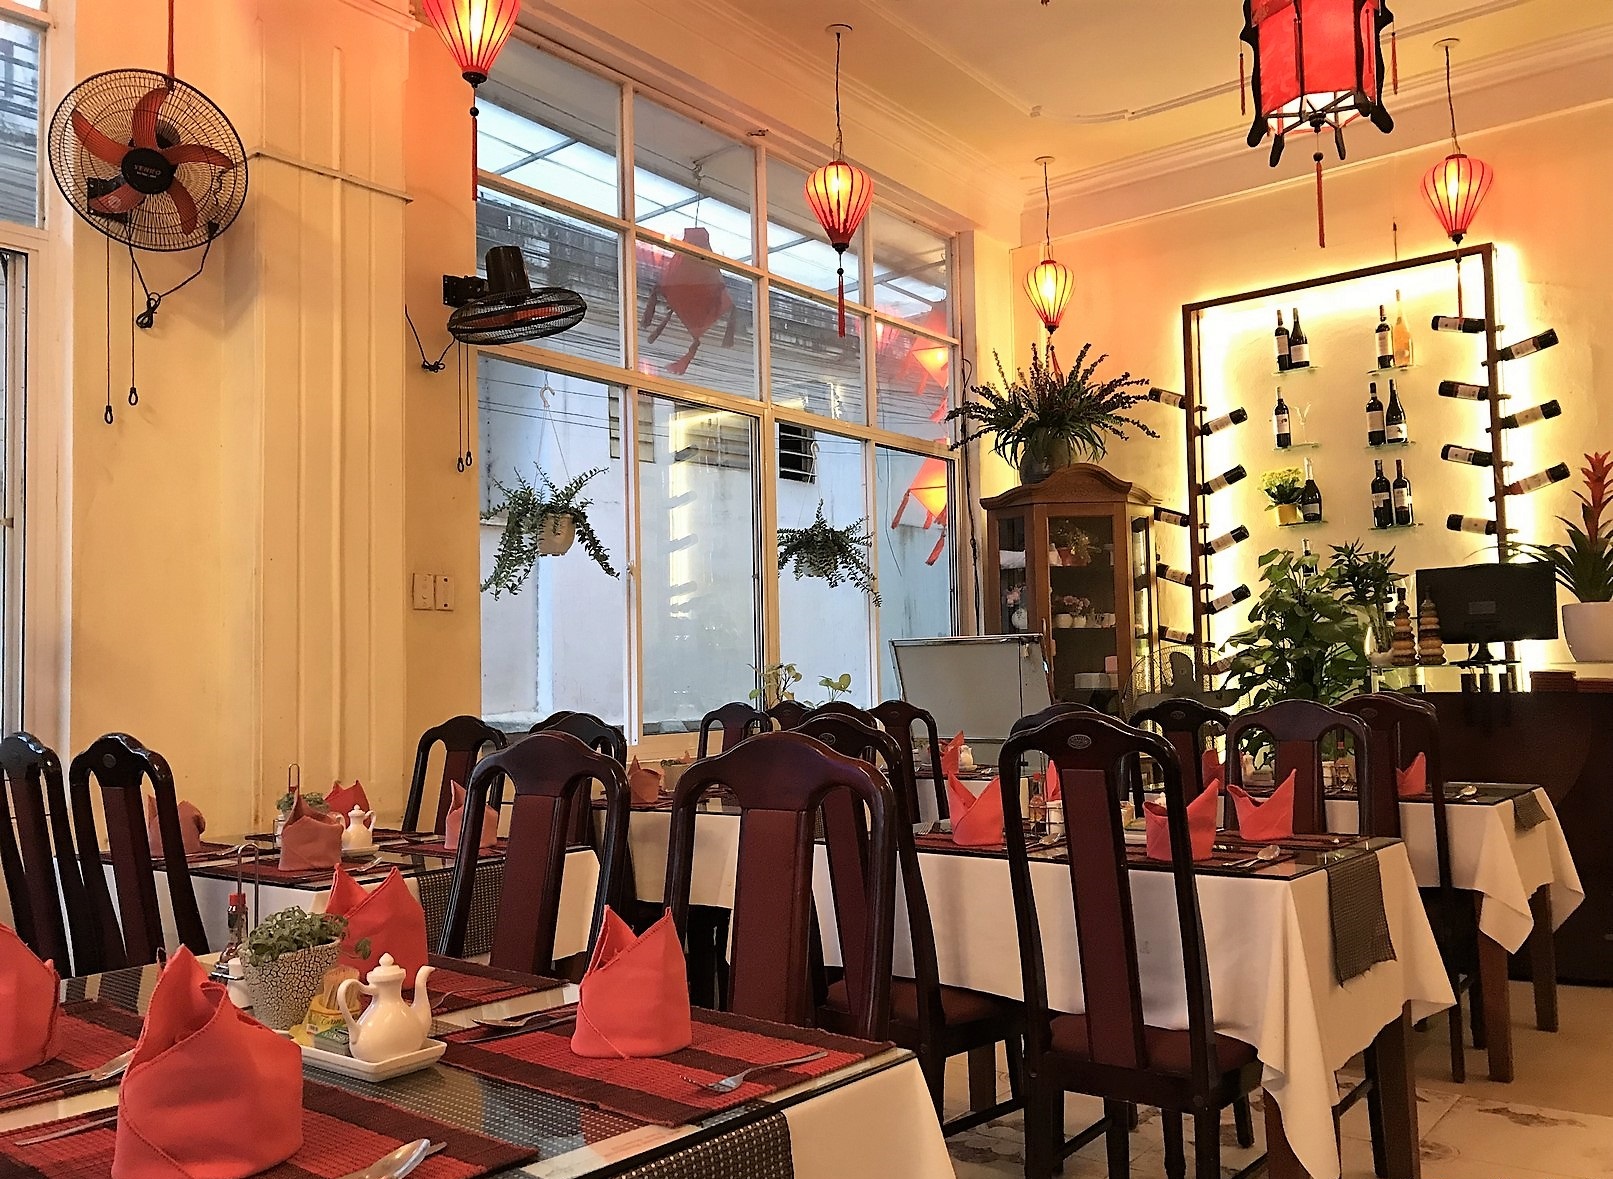 Risotto Hue - Top 10 best restaurants in Hue